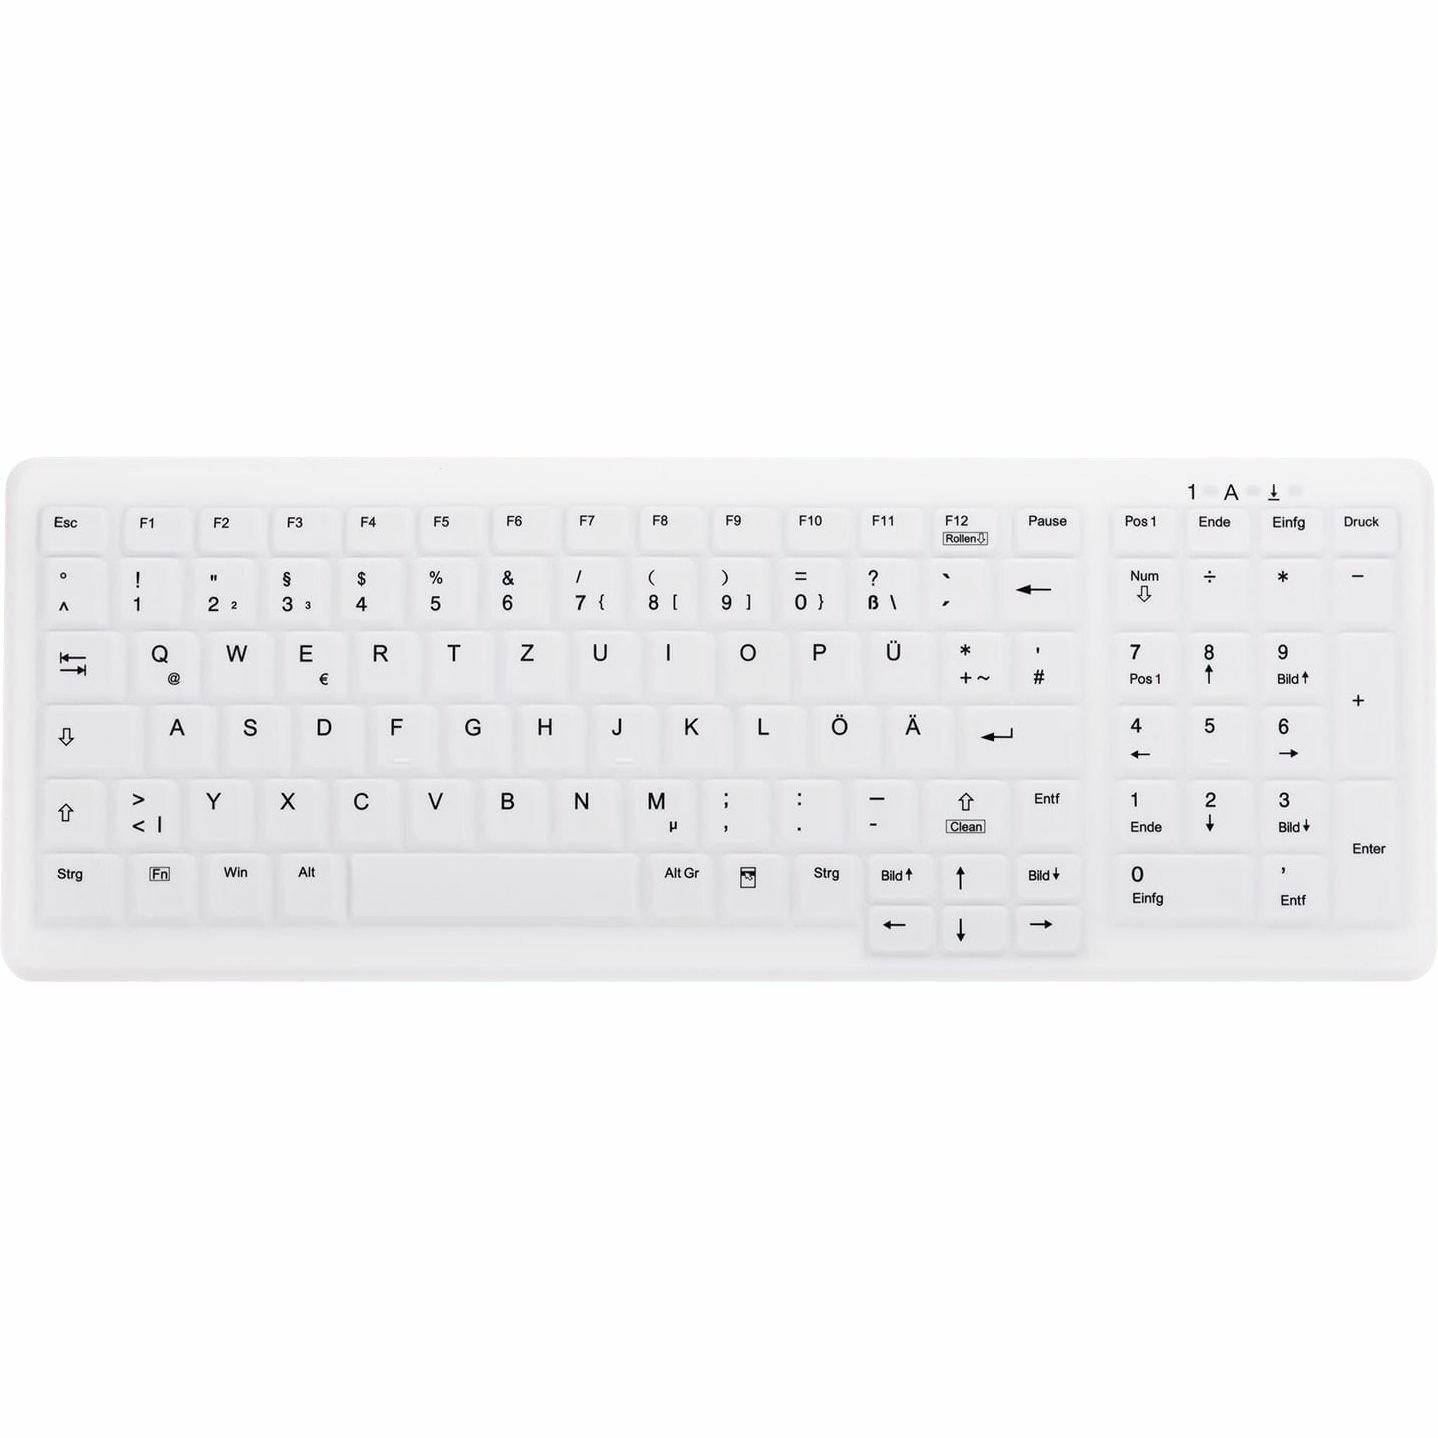 CHERRY AK-C7000 Keyboard - Wired/Wireless Connectivity - USB 1.1 Interface - White